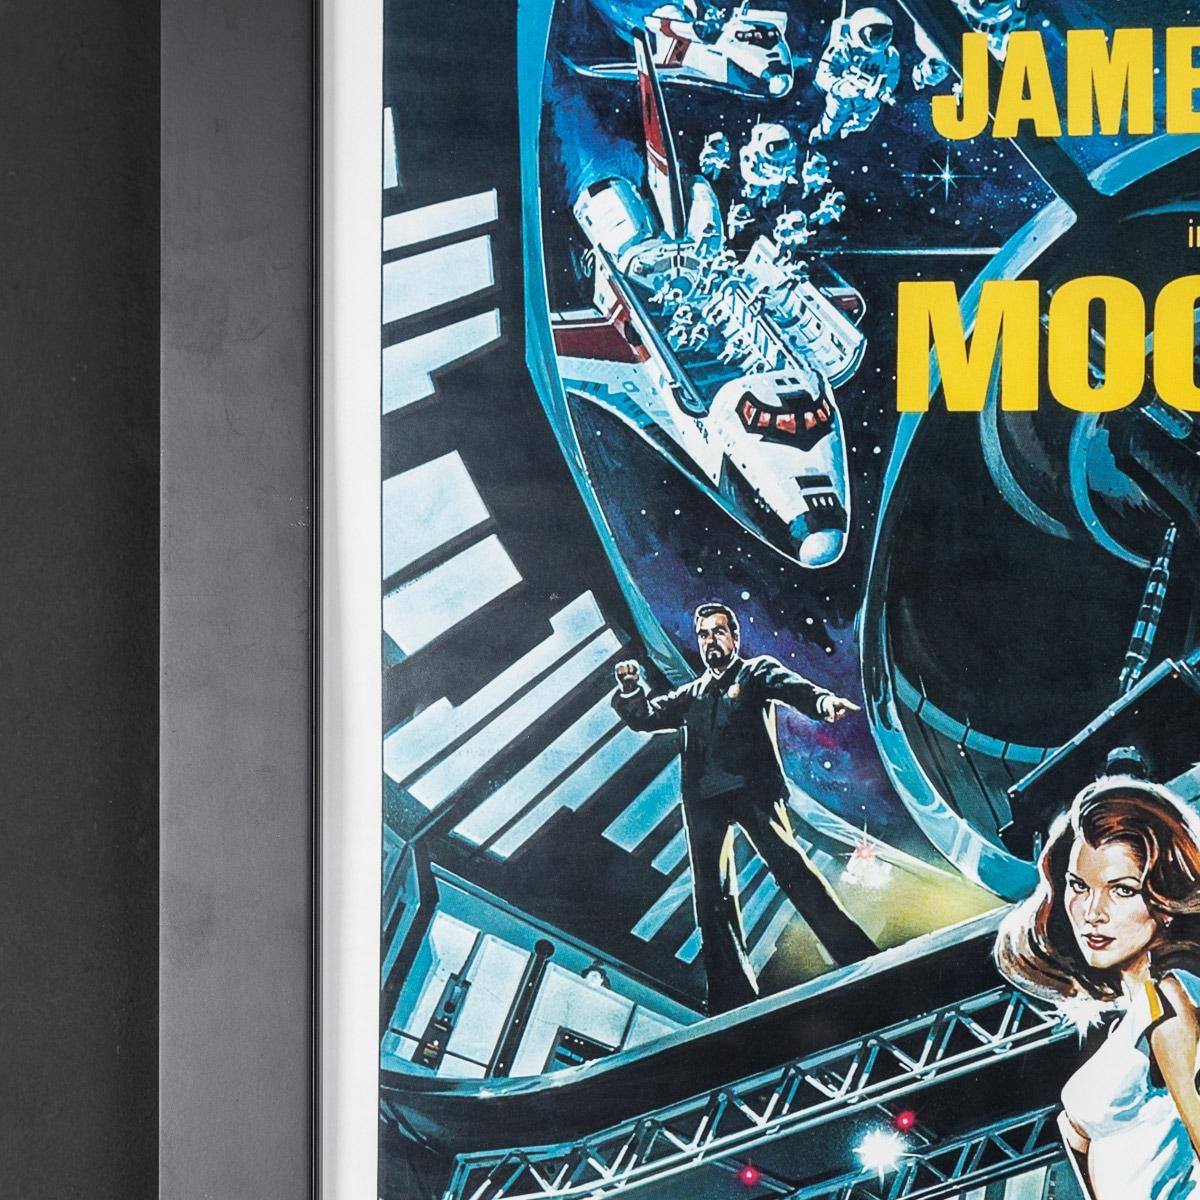 20th Century Original James Bond 007 'Moonraker' Film Poster, Signed by Roger Moore, c.1979 For Sale